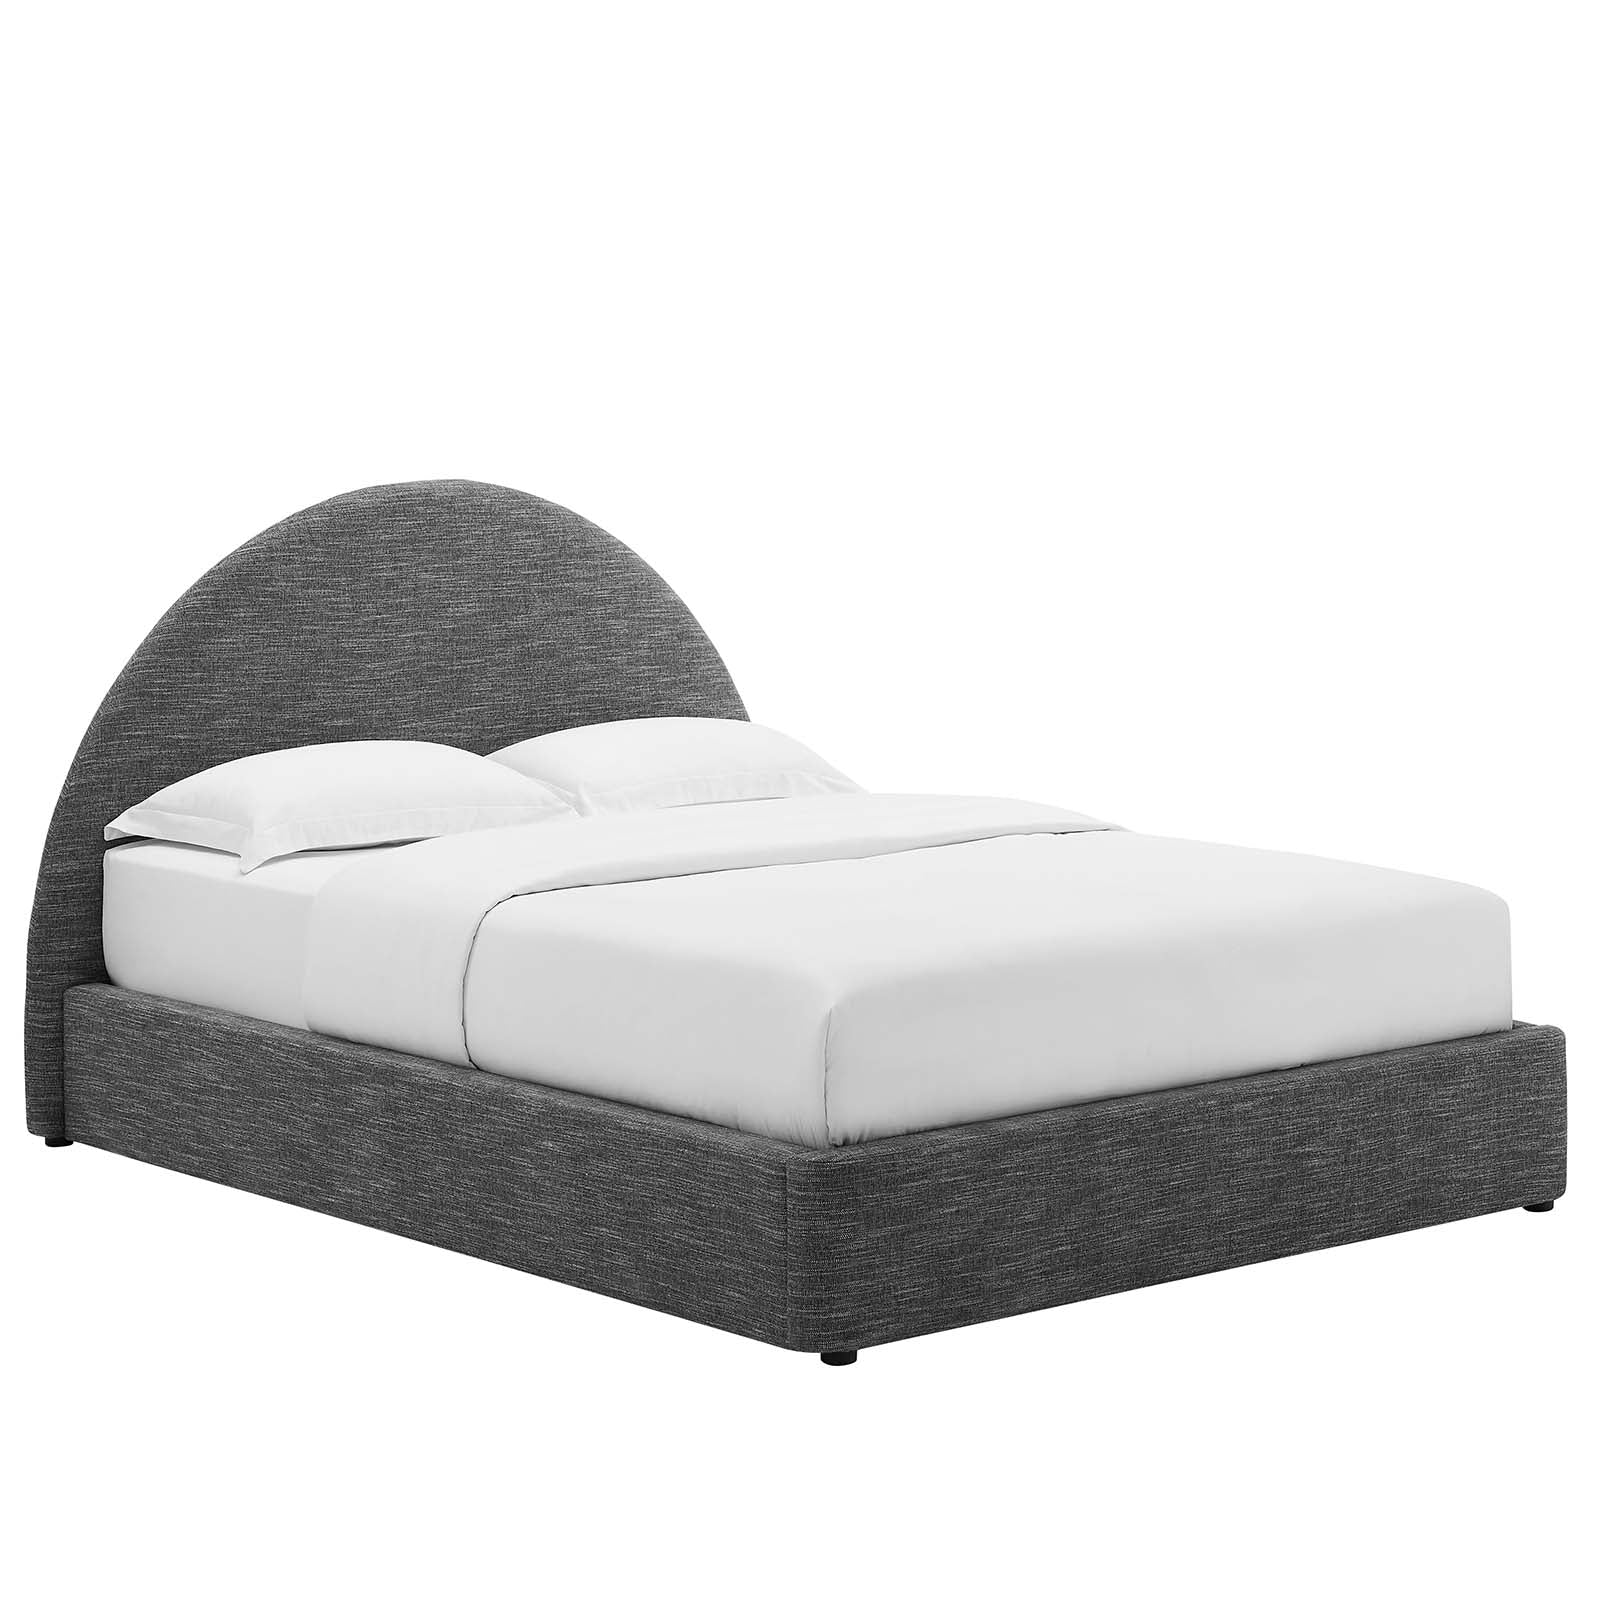 Resort Upholstered Fabric Arched Round King Platform Bed